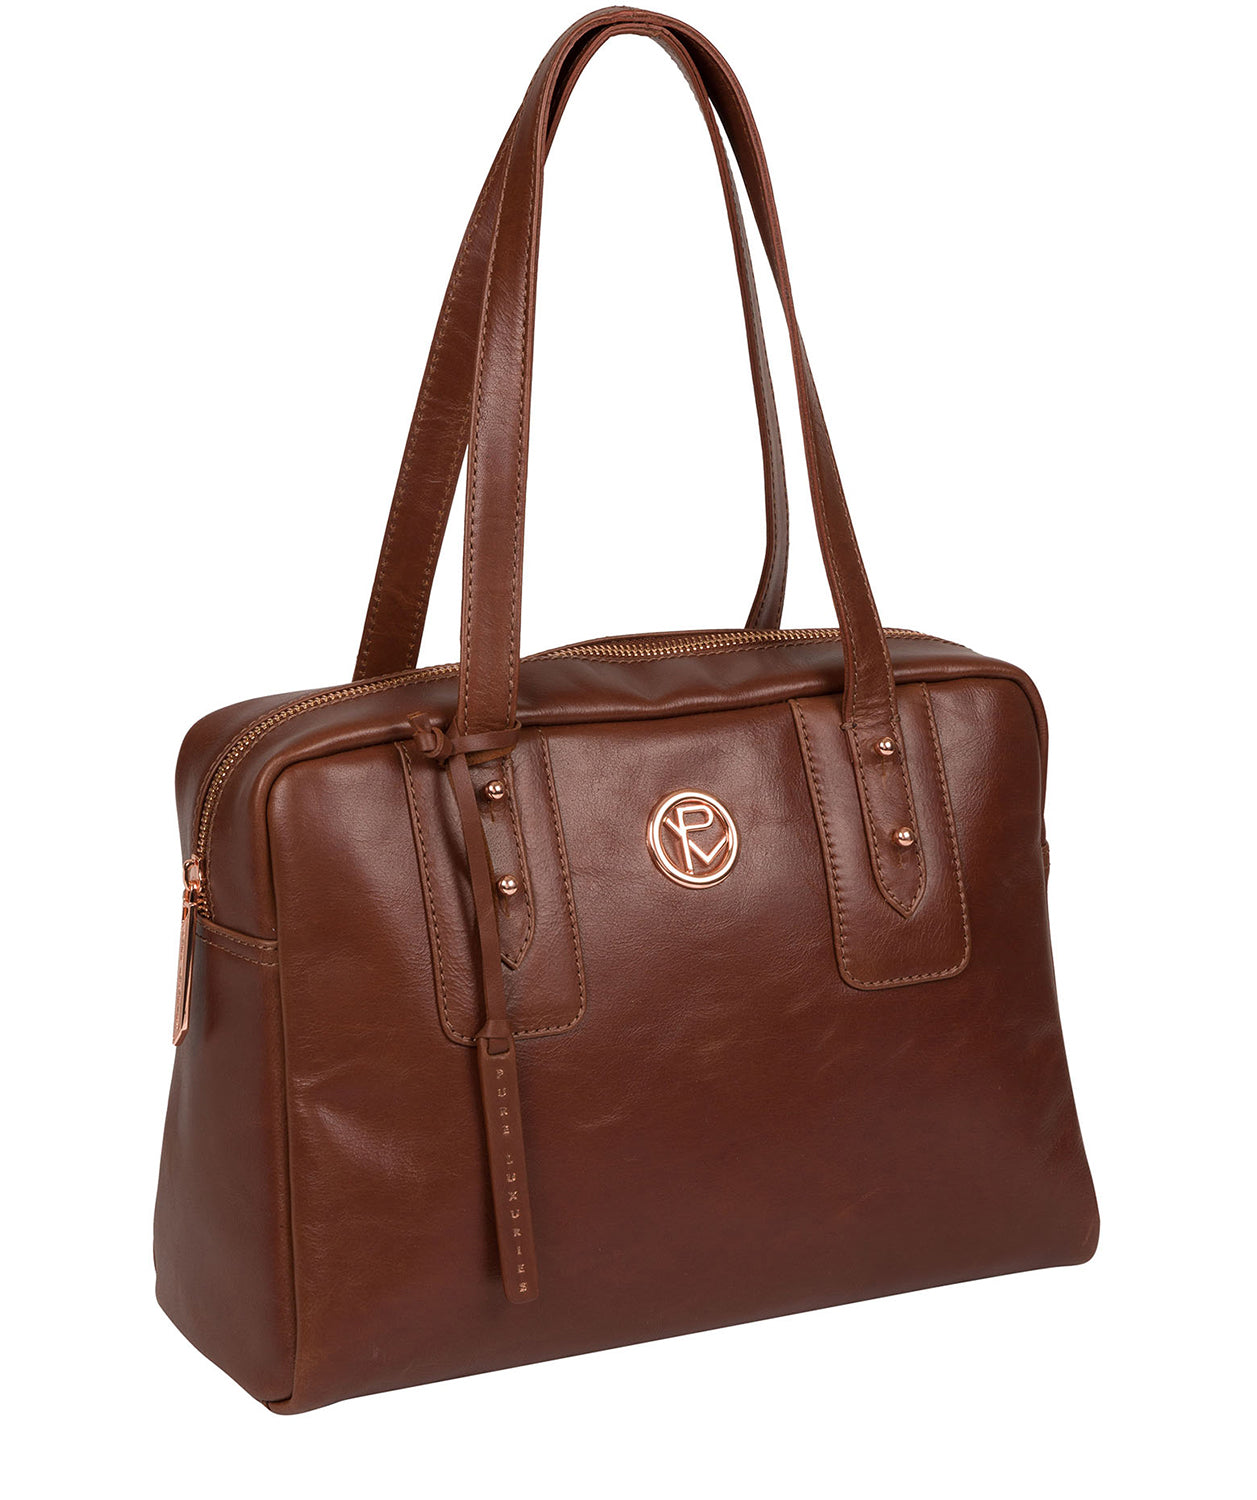 'Madox' Cognac Leather Handbag image 6